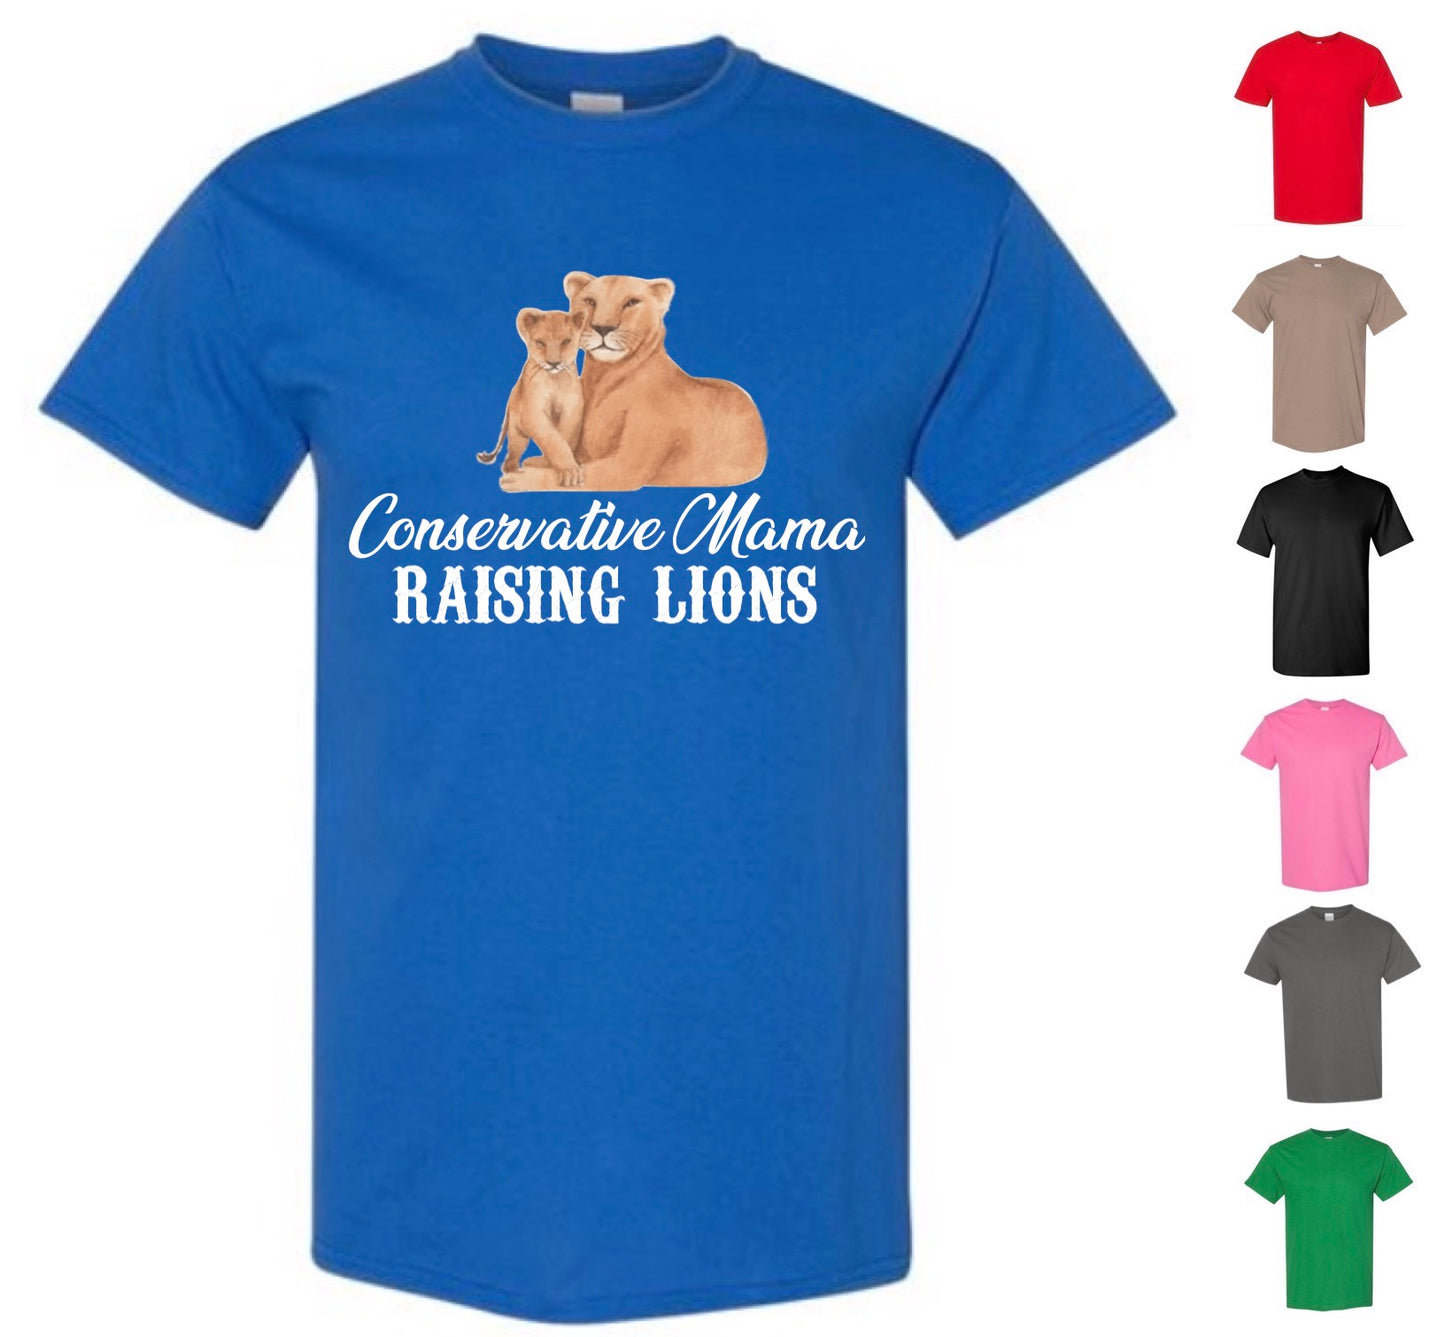 Conservative Mama Raising Lions (FREE Shipping)